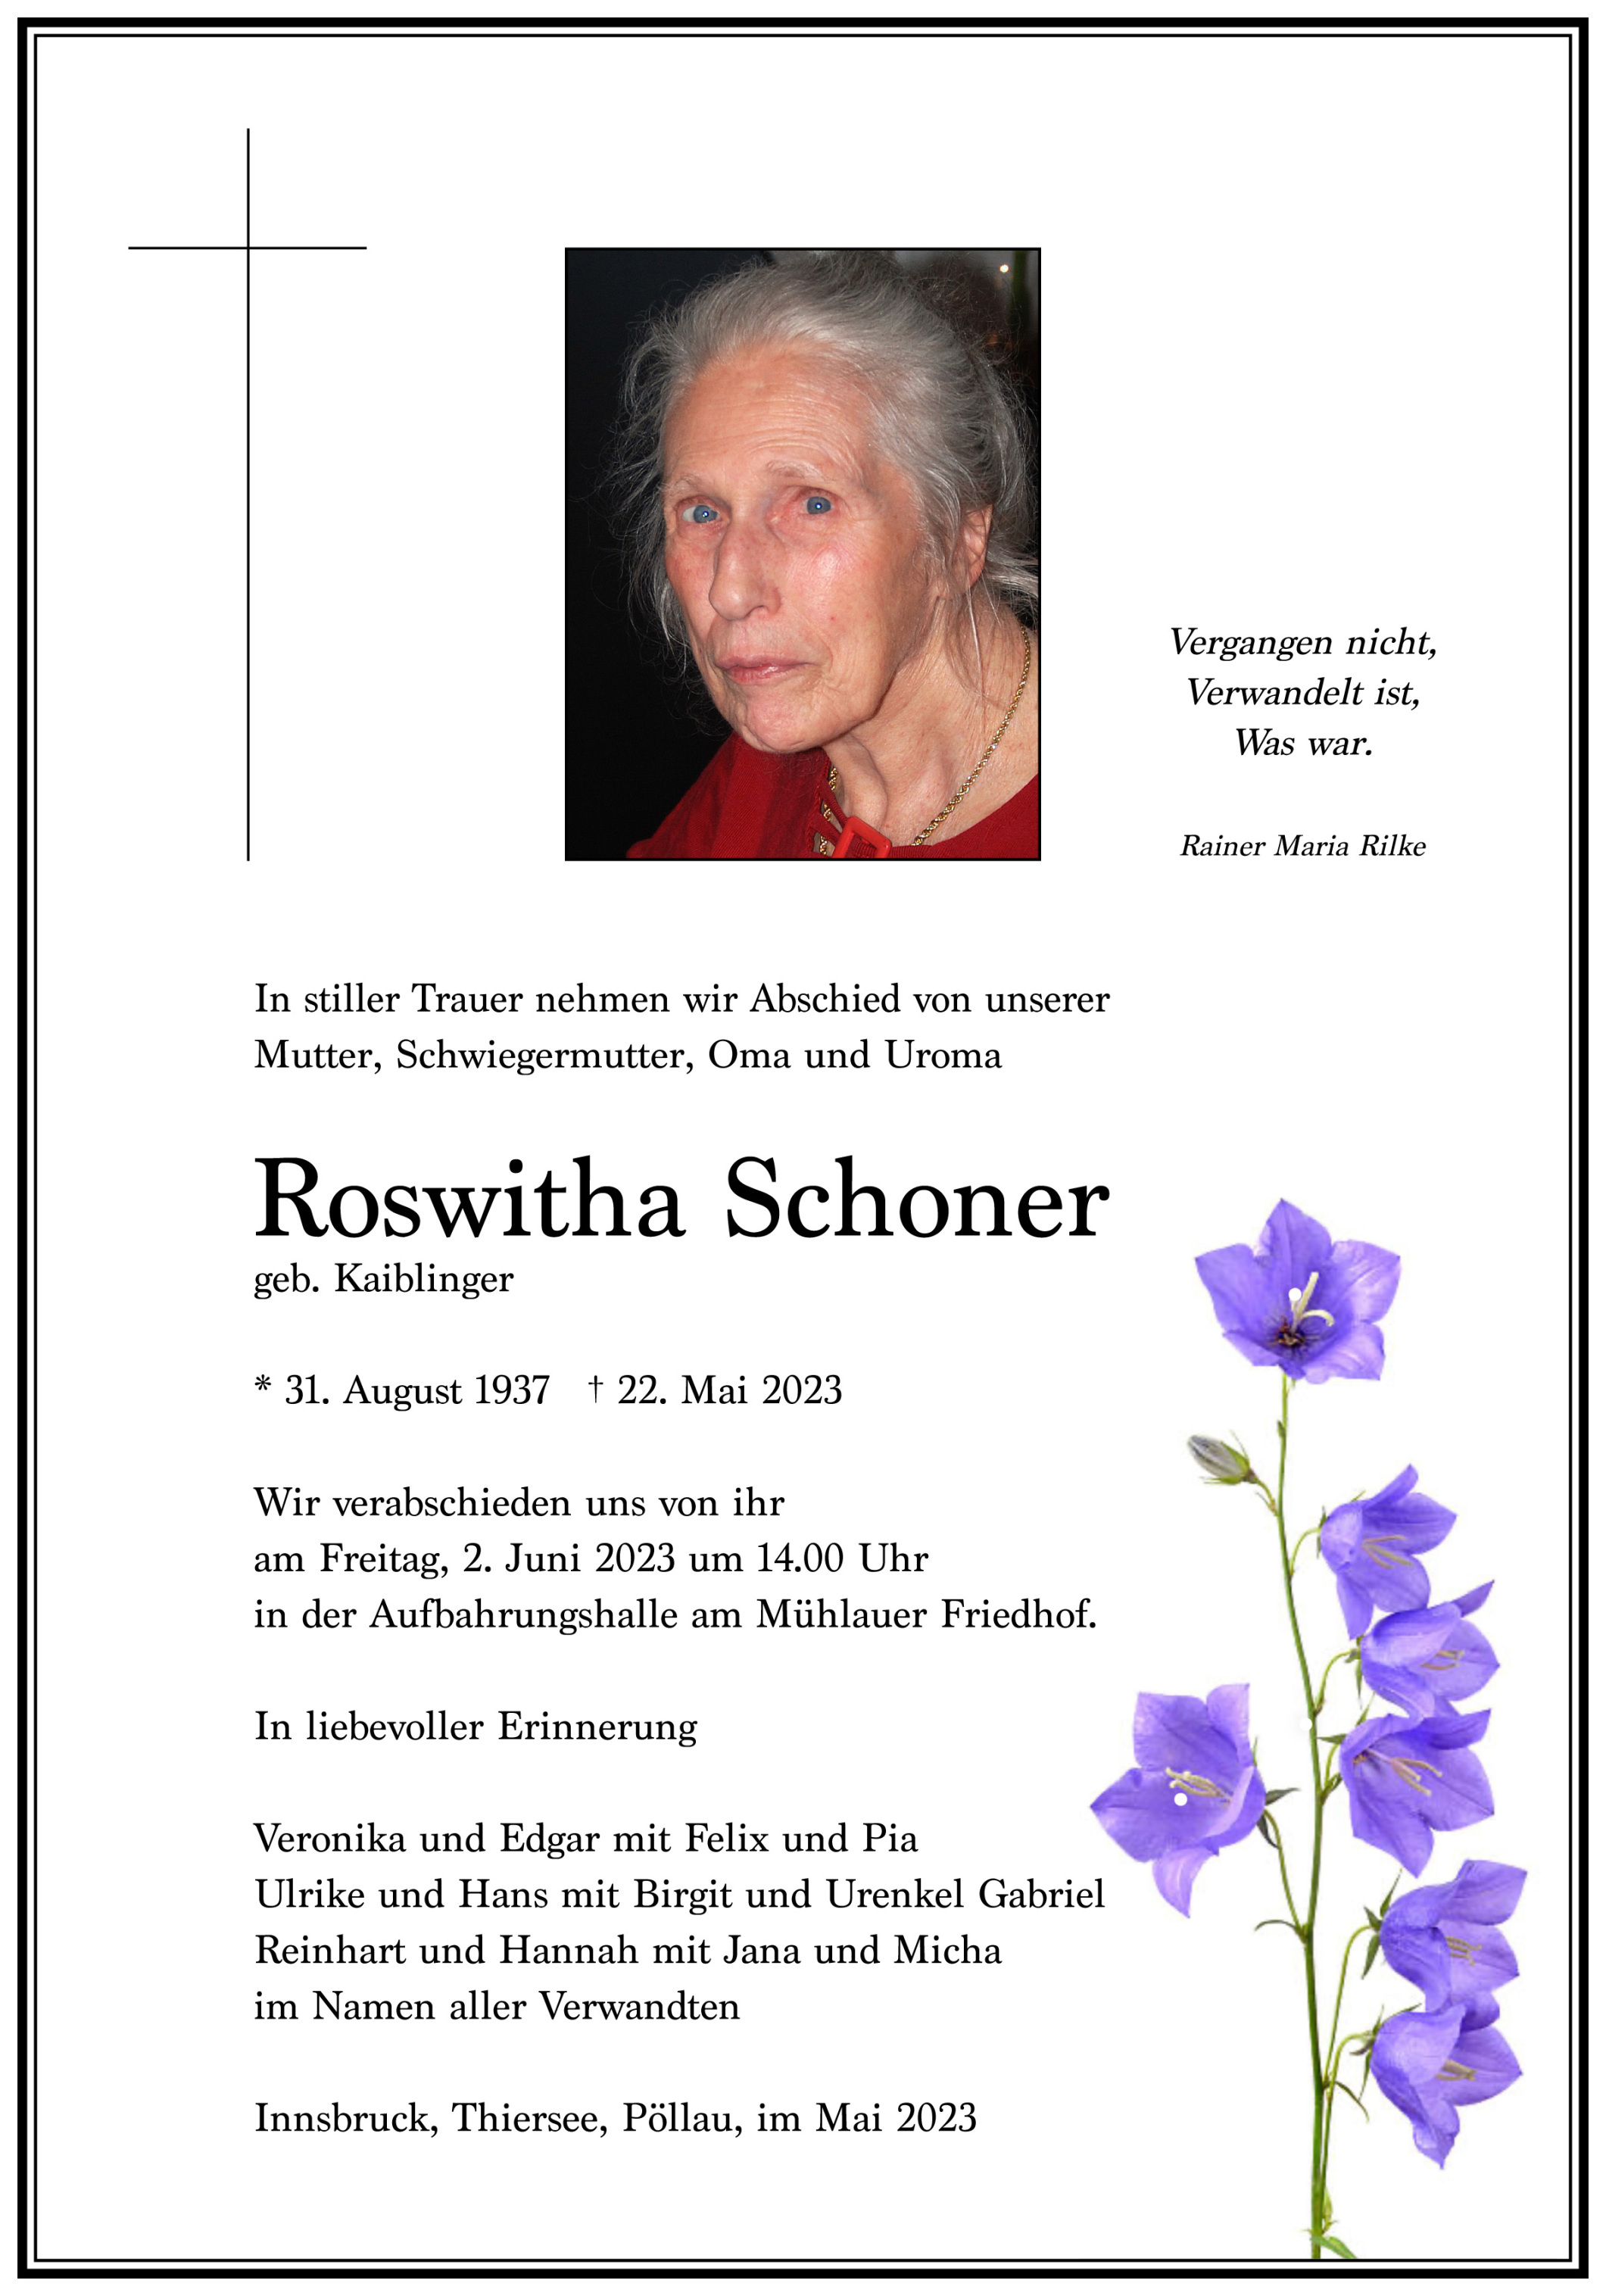 Roswitha Schoner